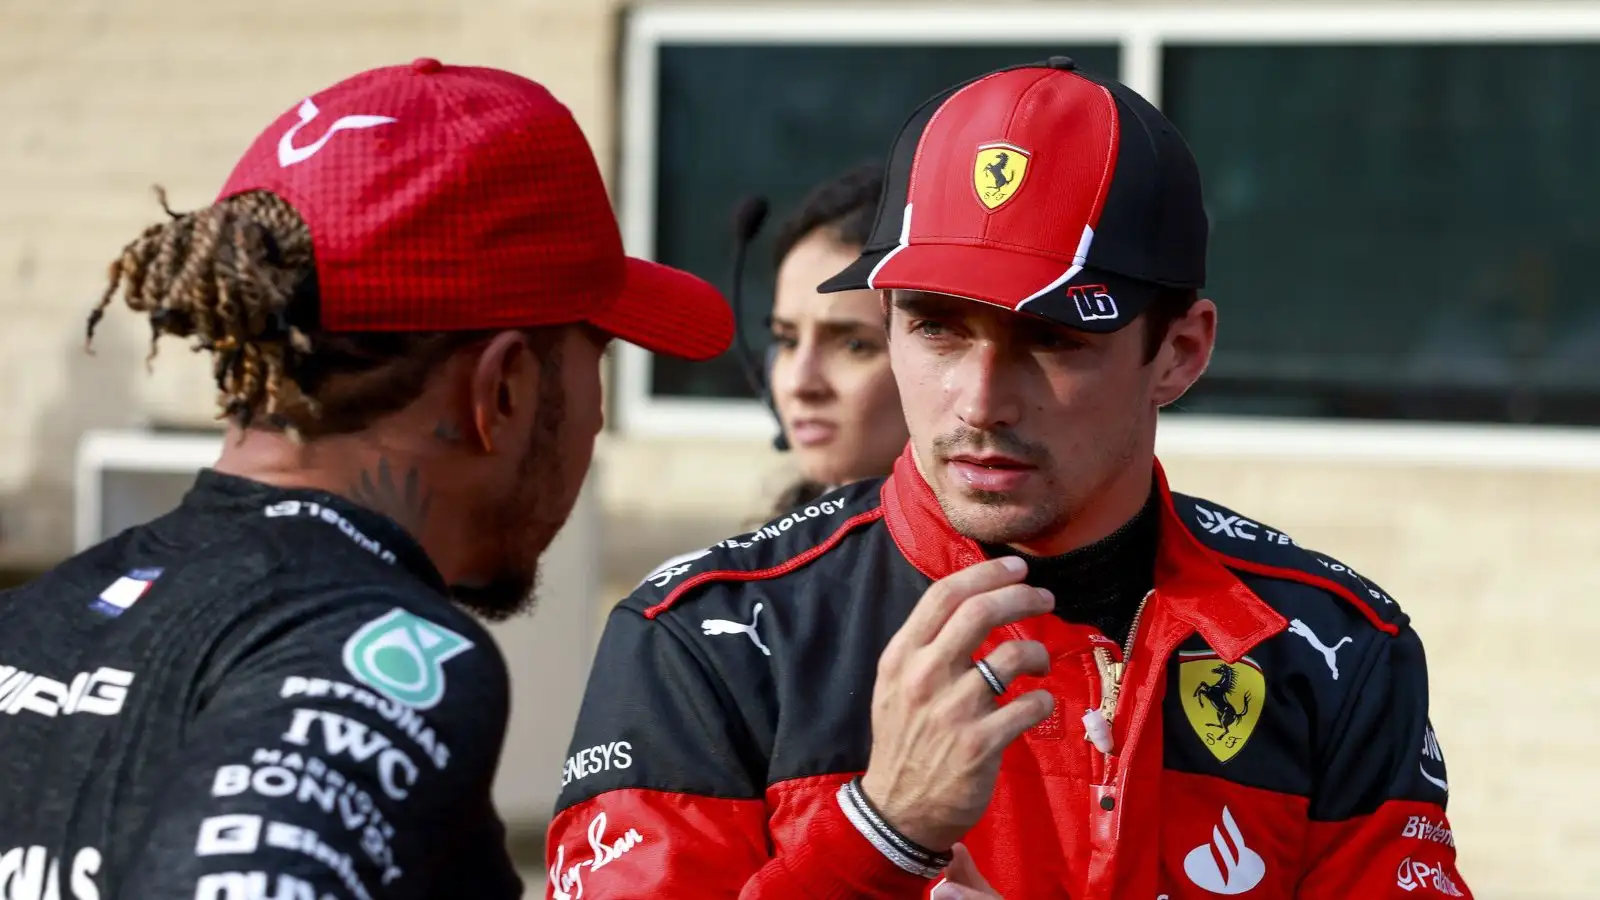 Ferrari driver Charles Leclerc chatting with Lewis Hamilton.